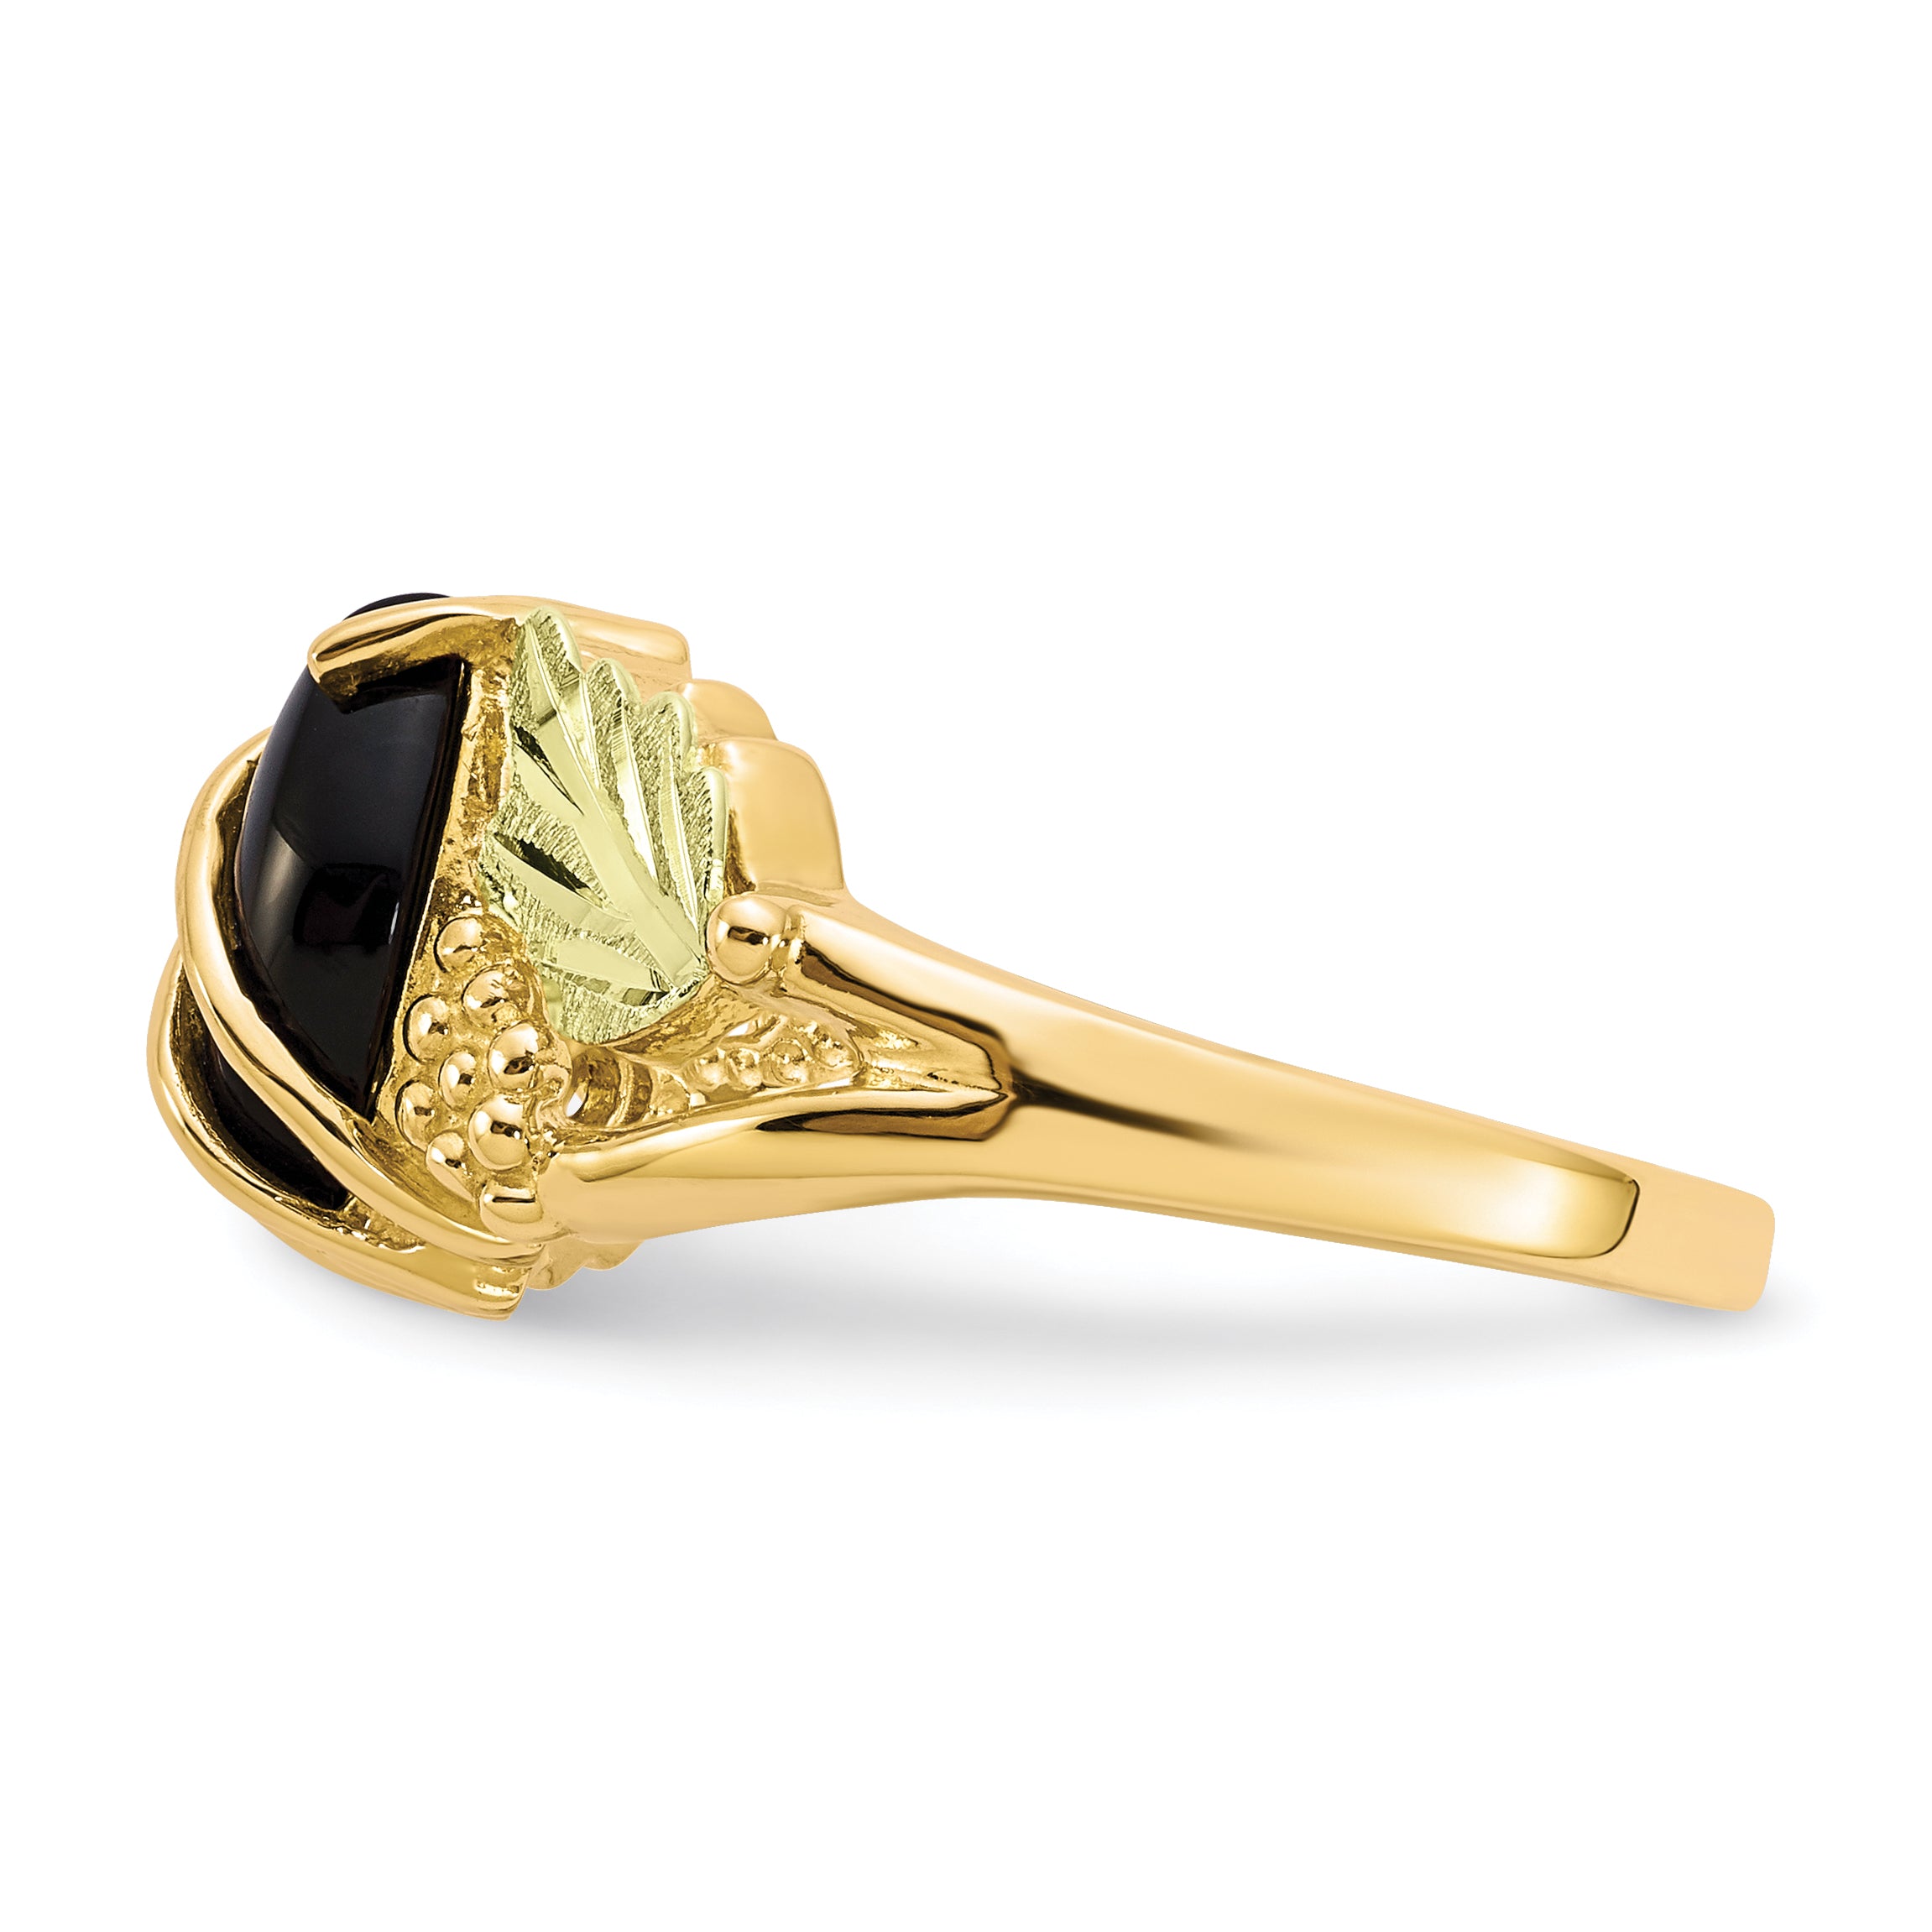 10k Tri-color Black Hills Gold Onyx Ring